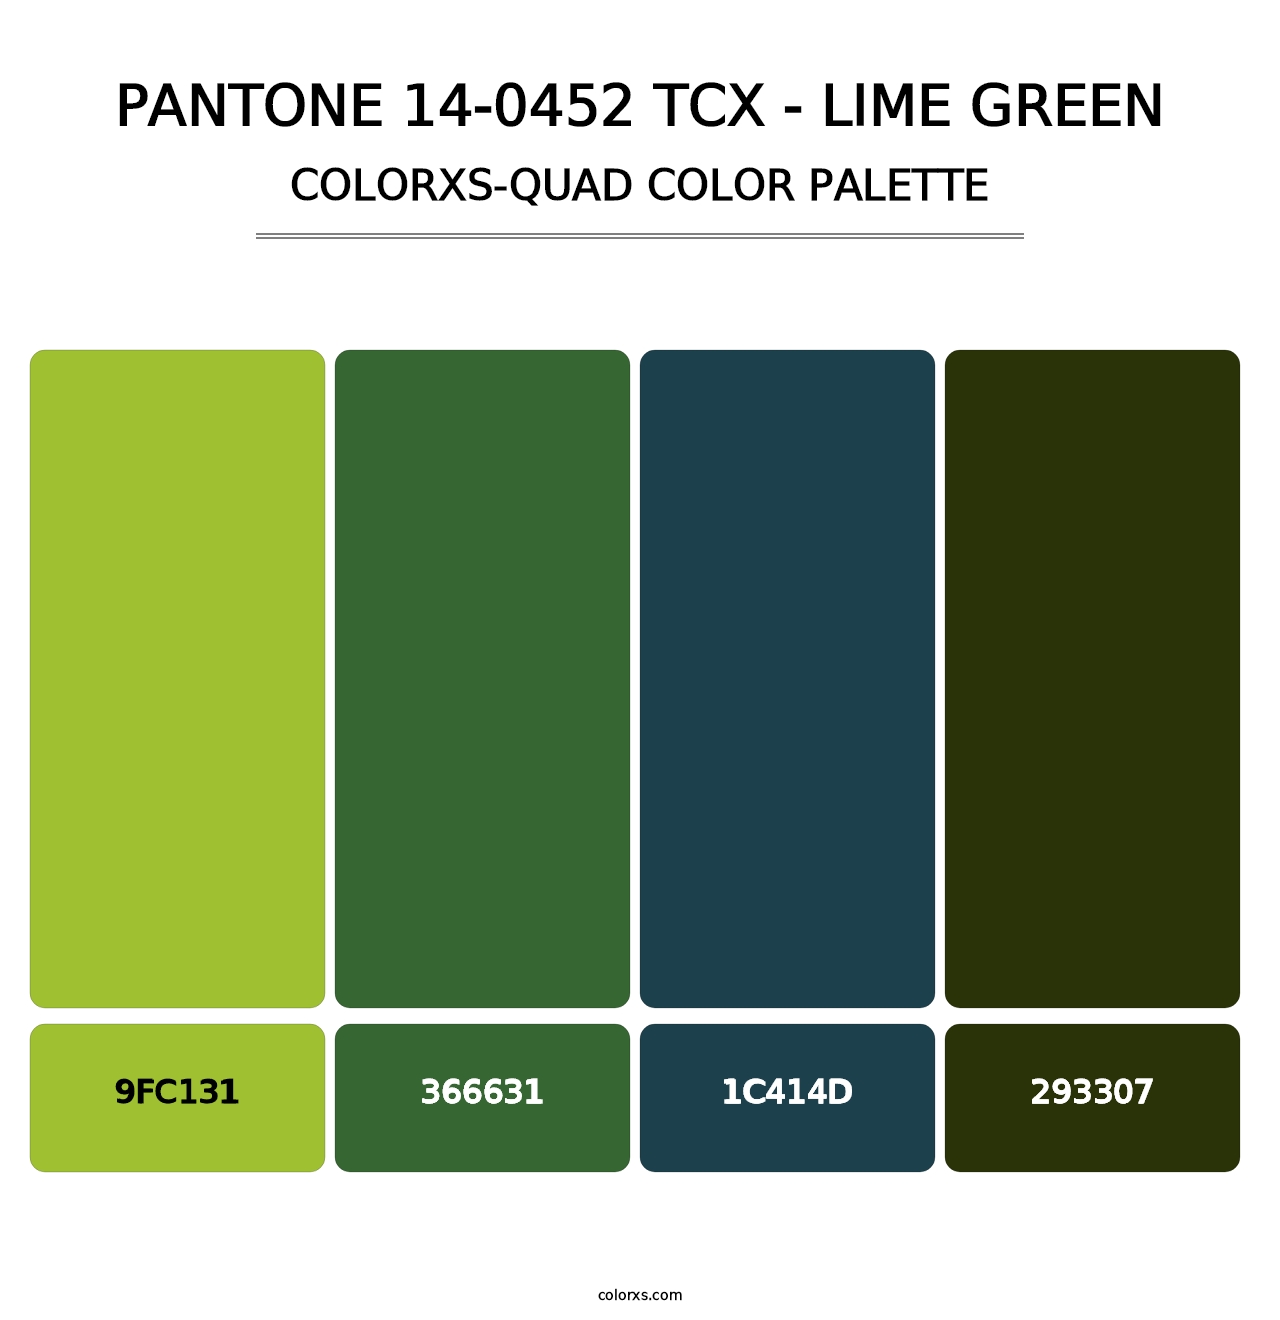 PANTONE 14-0452 TCX - Lime Green - Colorxs Quad Palette